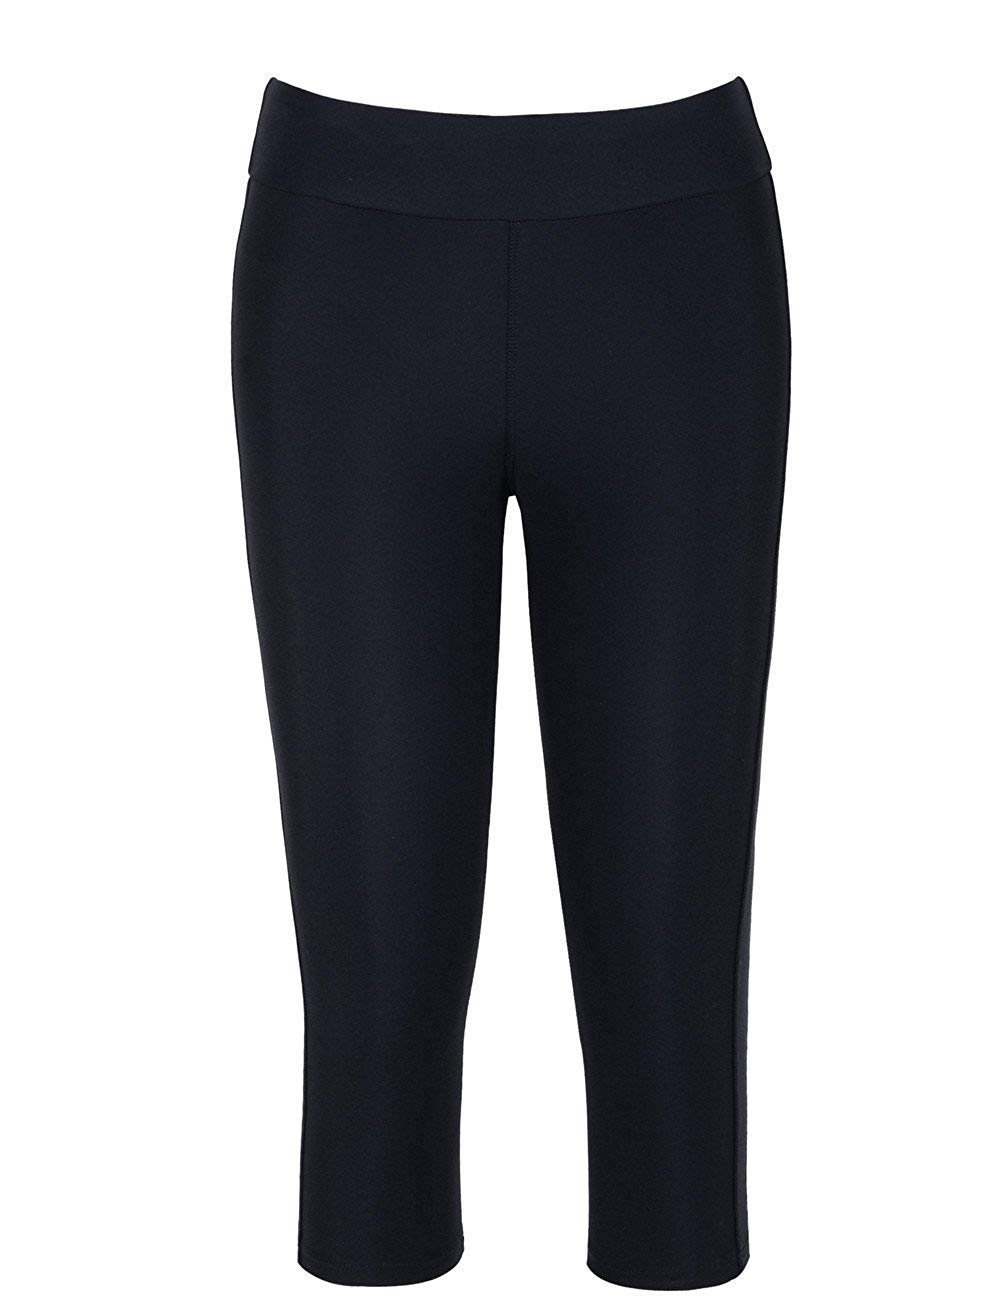 Hilor Women's UV Rash Guard Pants Crop Swim Leggings Sports, Black 1 ...